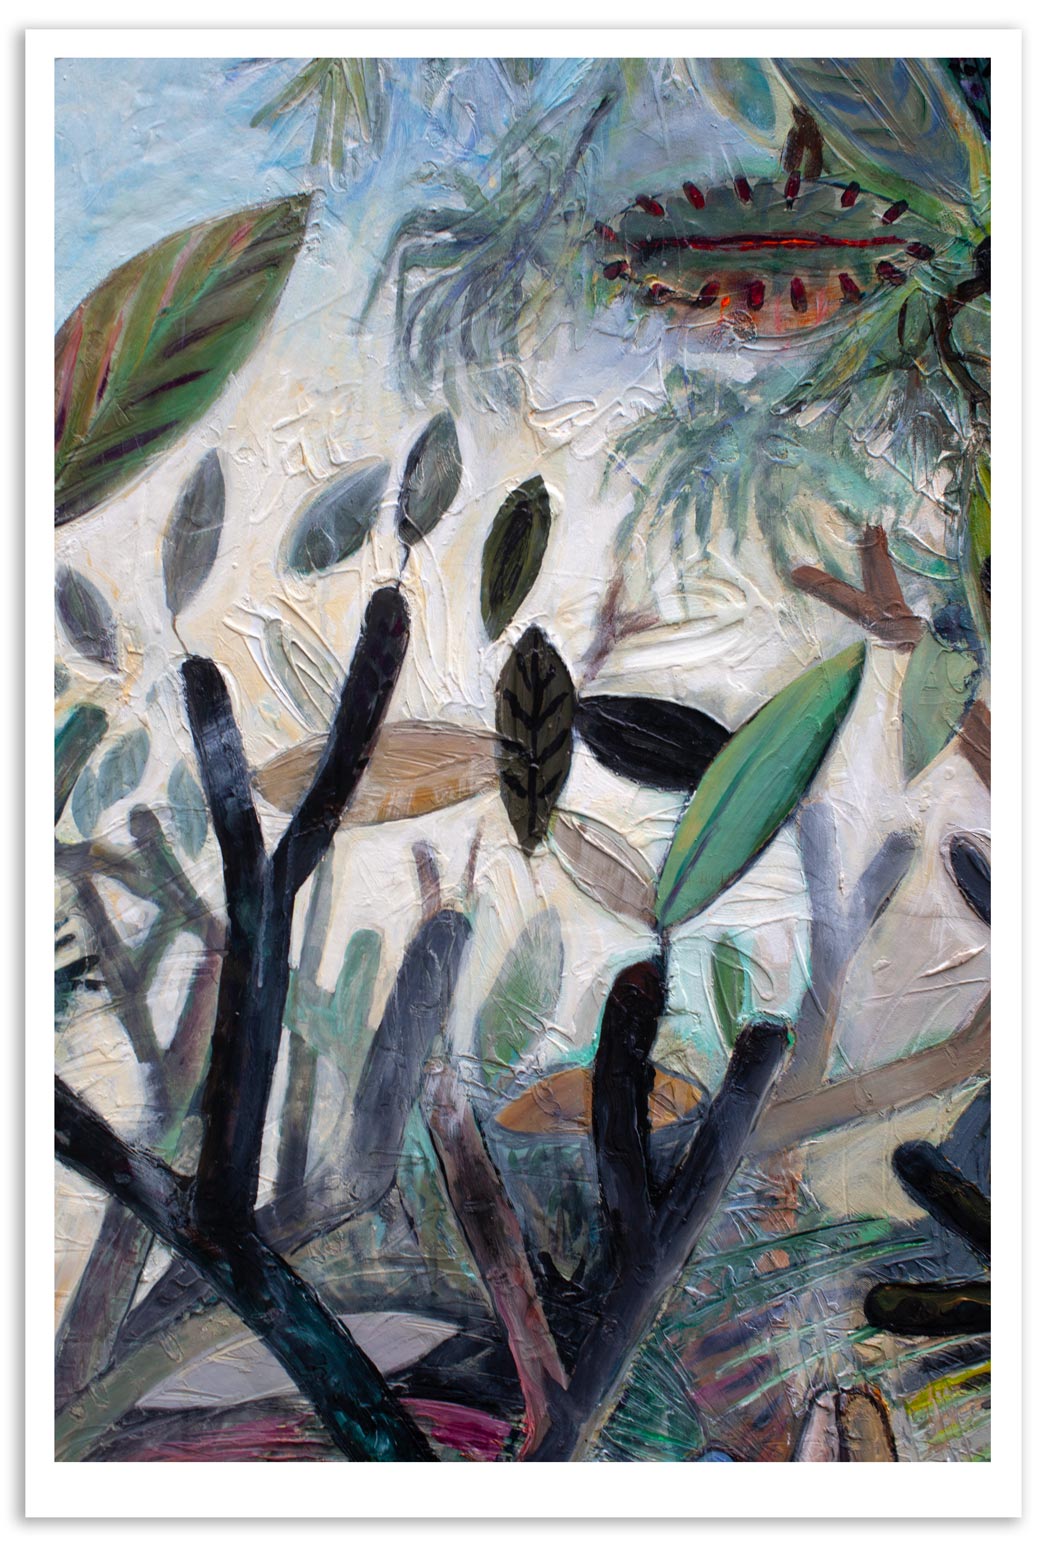 Plumeria Painting by Michael Daly Artist, Kauai, Hawaii. Acrylic on Canvas (detail)